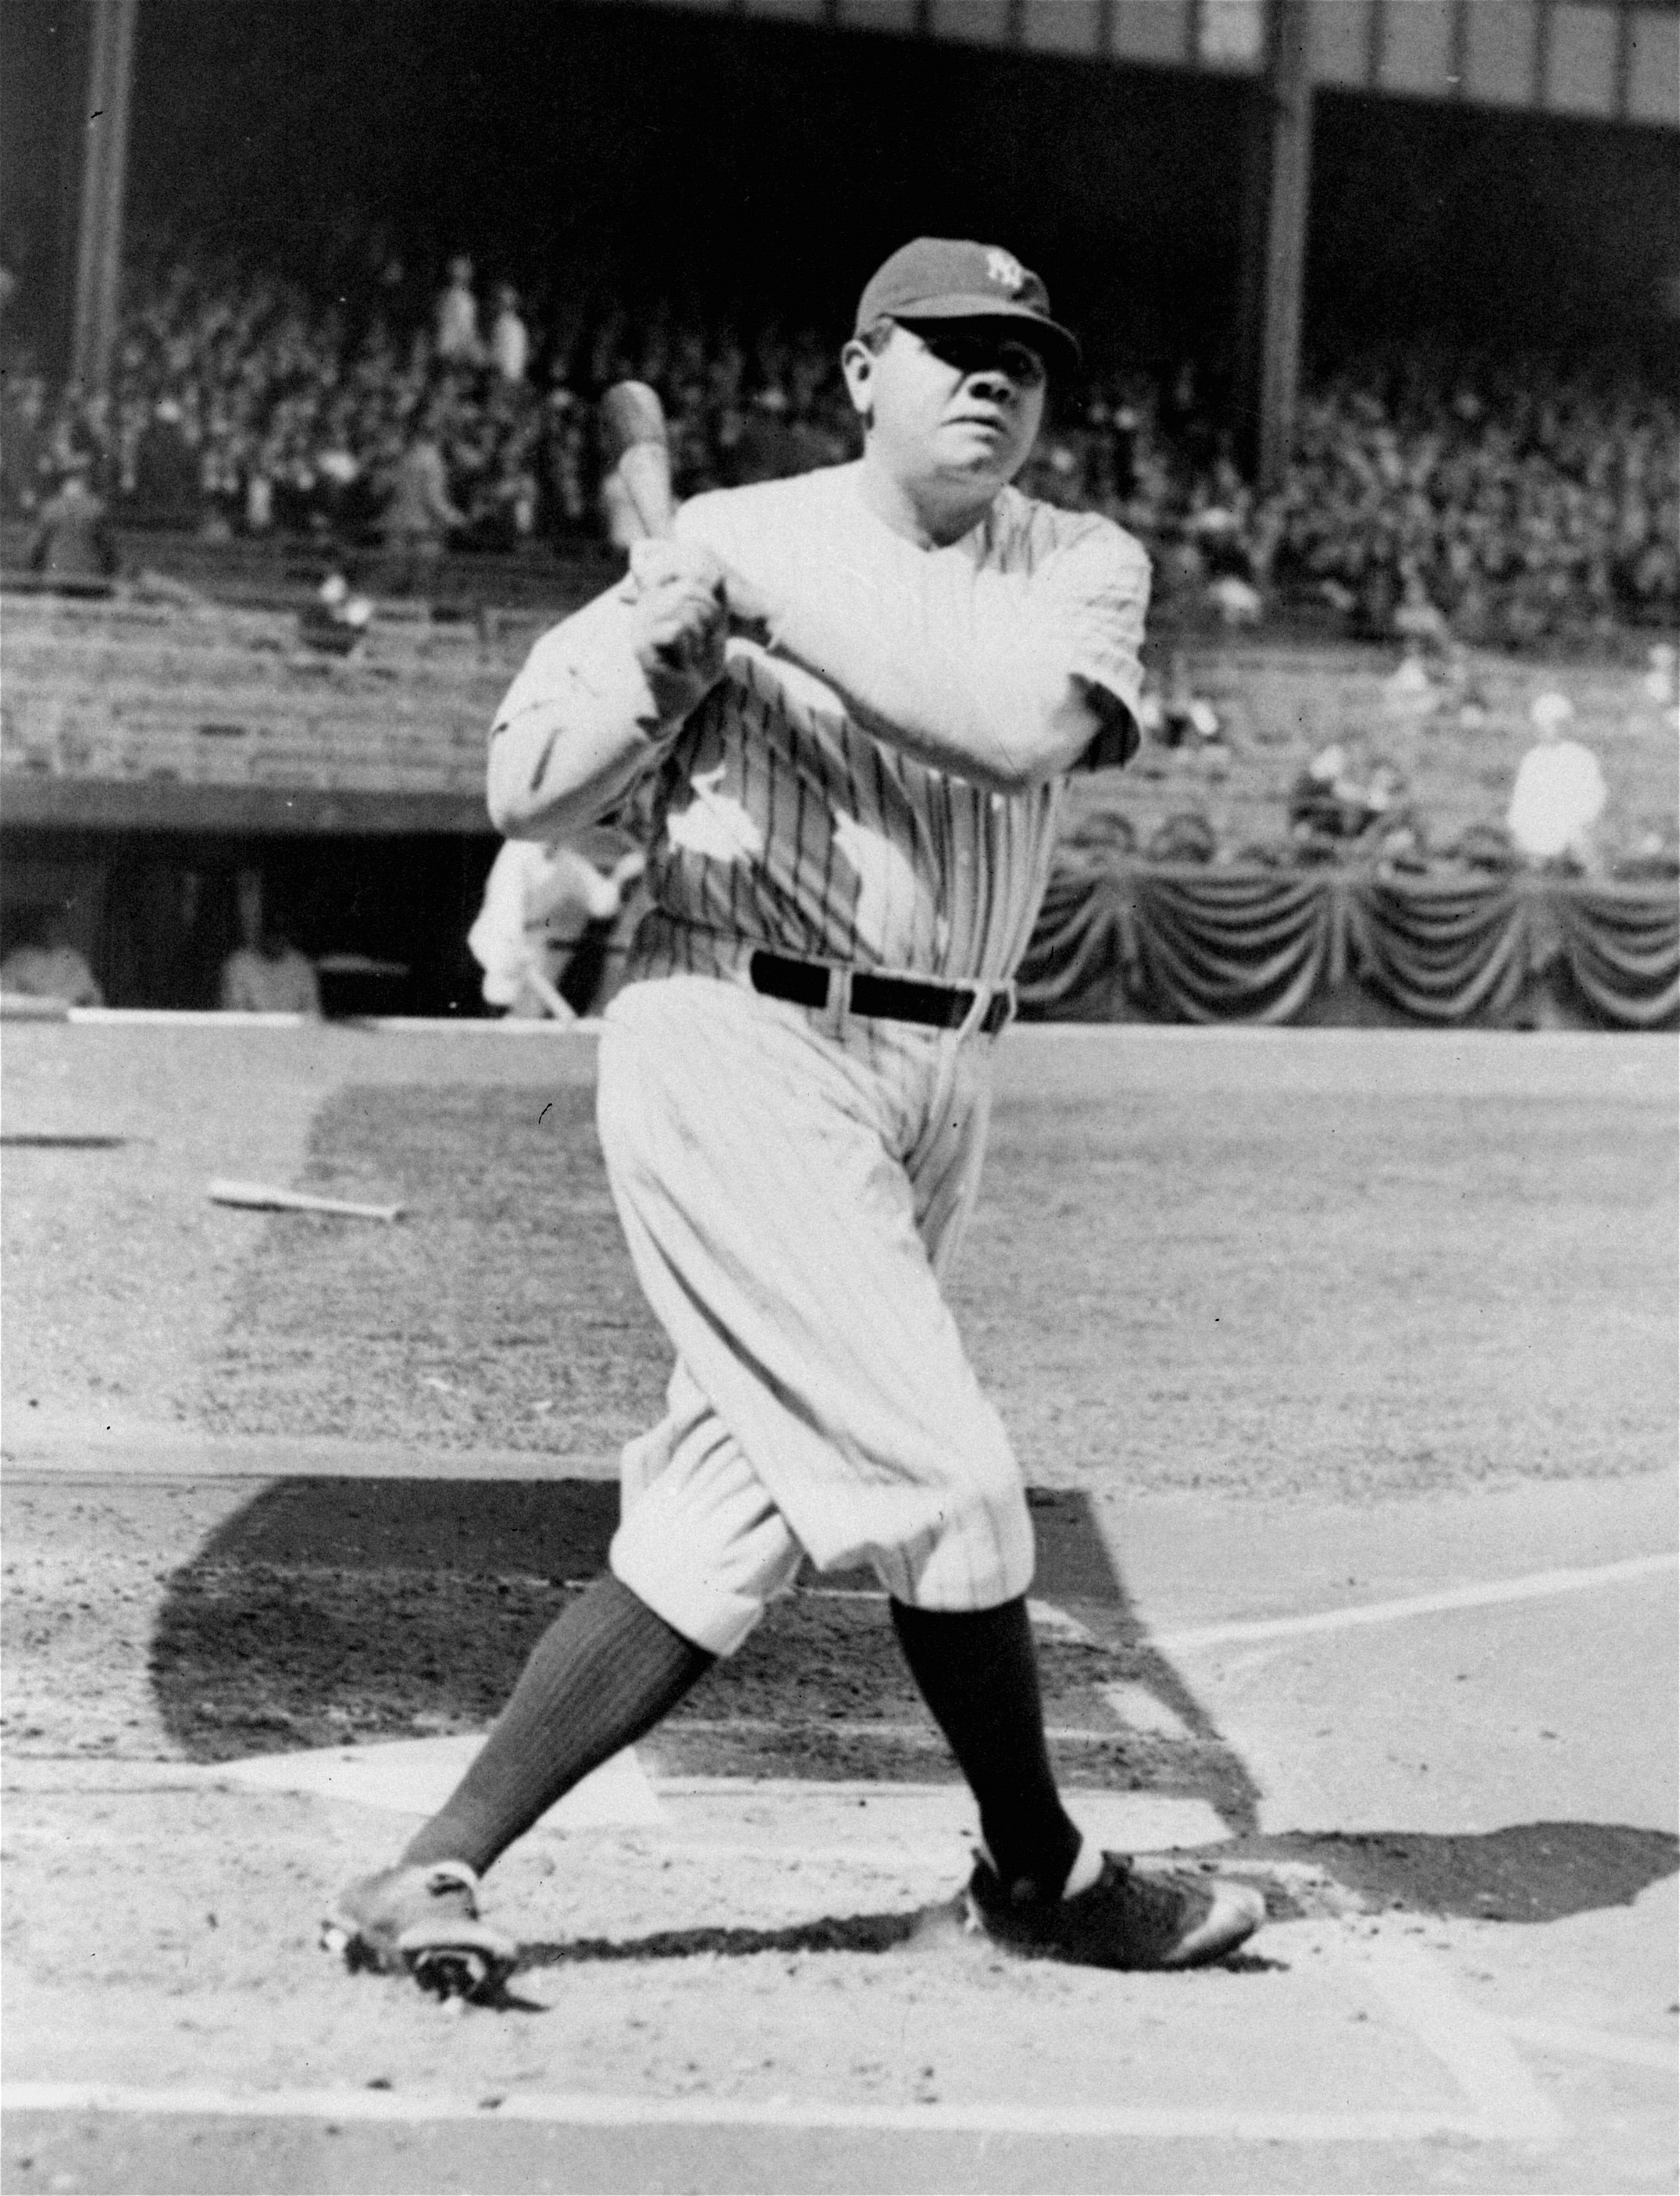 ON THIS DAY: May 25, 1935, Babe Ruth hits final 3 career home runs